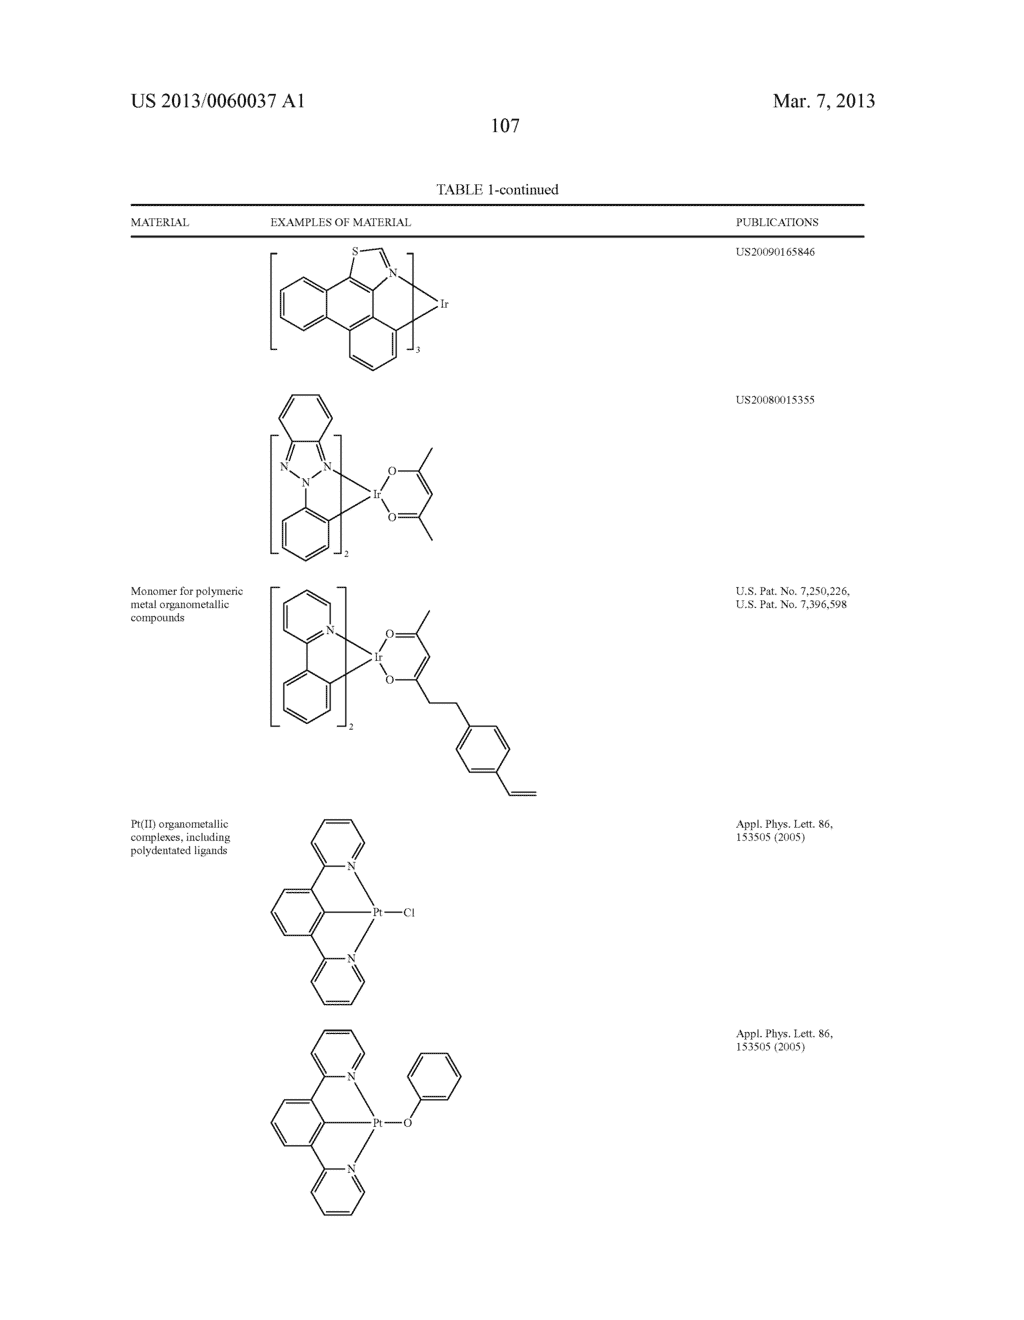 MATERIALS WITH AZA-DIBENZOTHIOPHENE OR AZA-DIBENZOFURAN CORE FOR PHOLED - diagram, schematic, and image 112